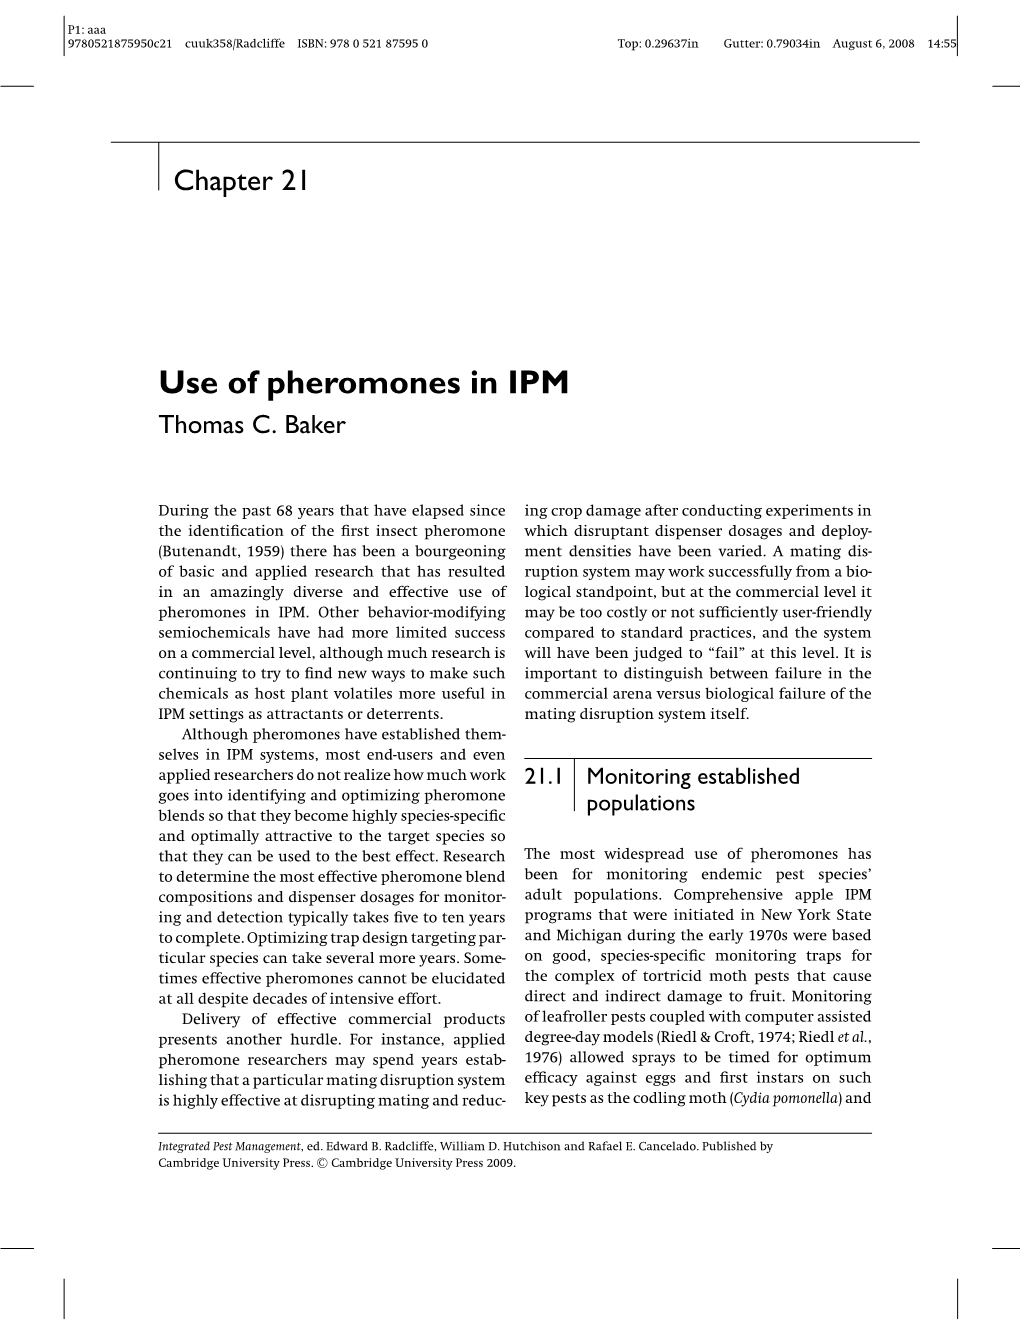 Use of Pheromones in IPM Thomas C